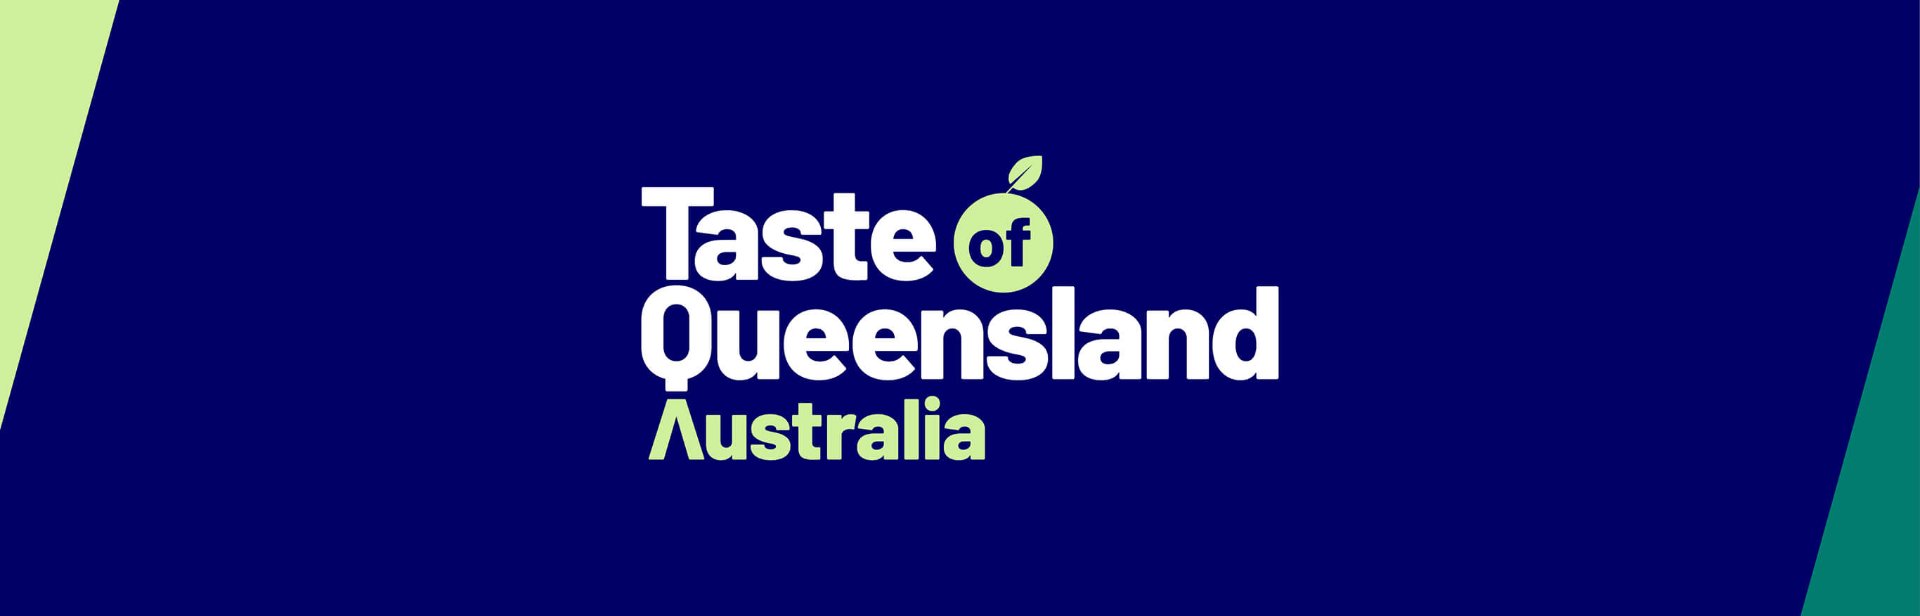 Taste of QLD banner